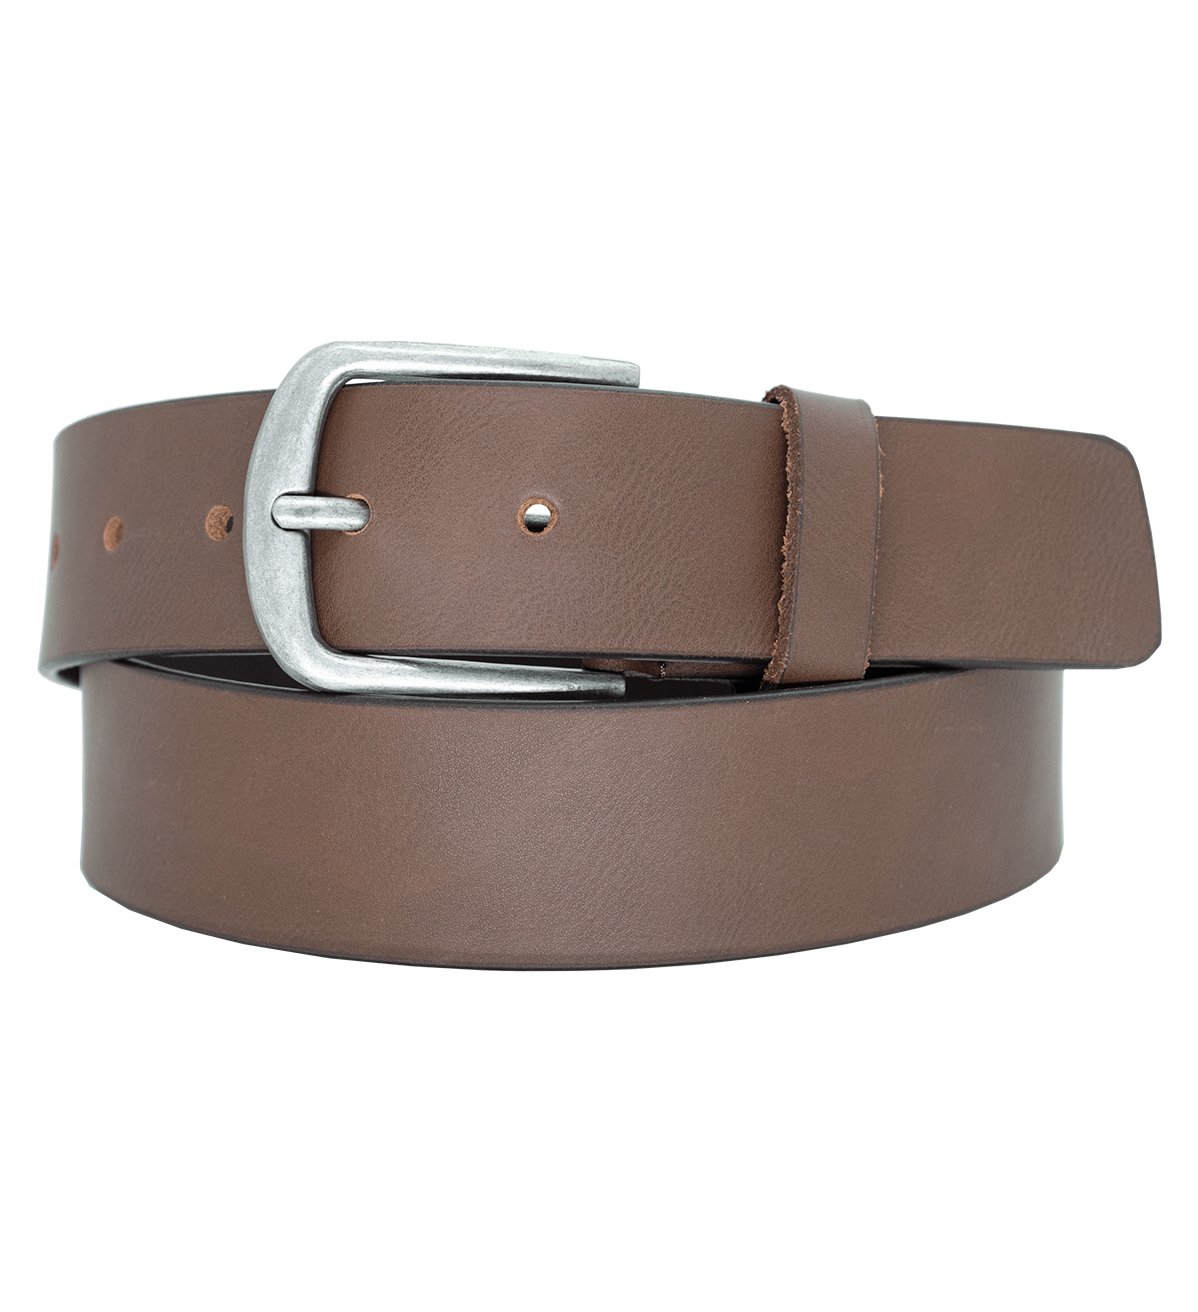 Men's Formal Genuine Leather Belt with Antique Silver Buckle - #BT-1513